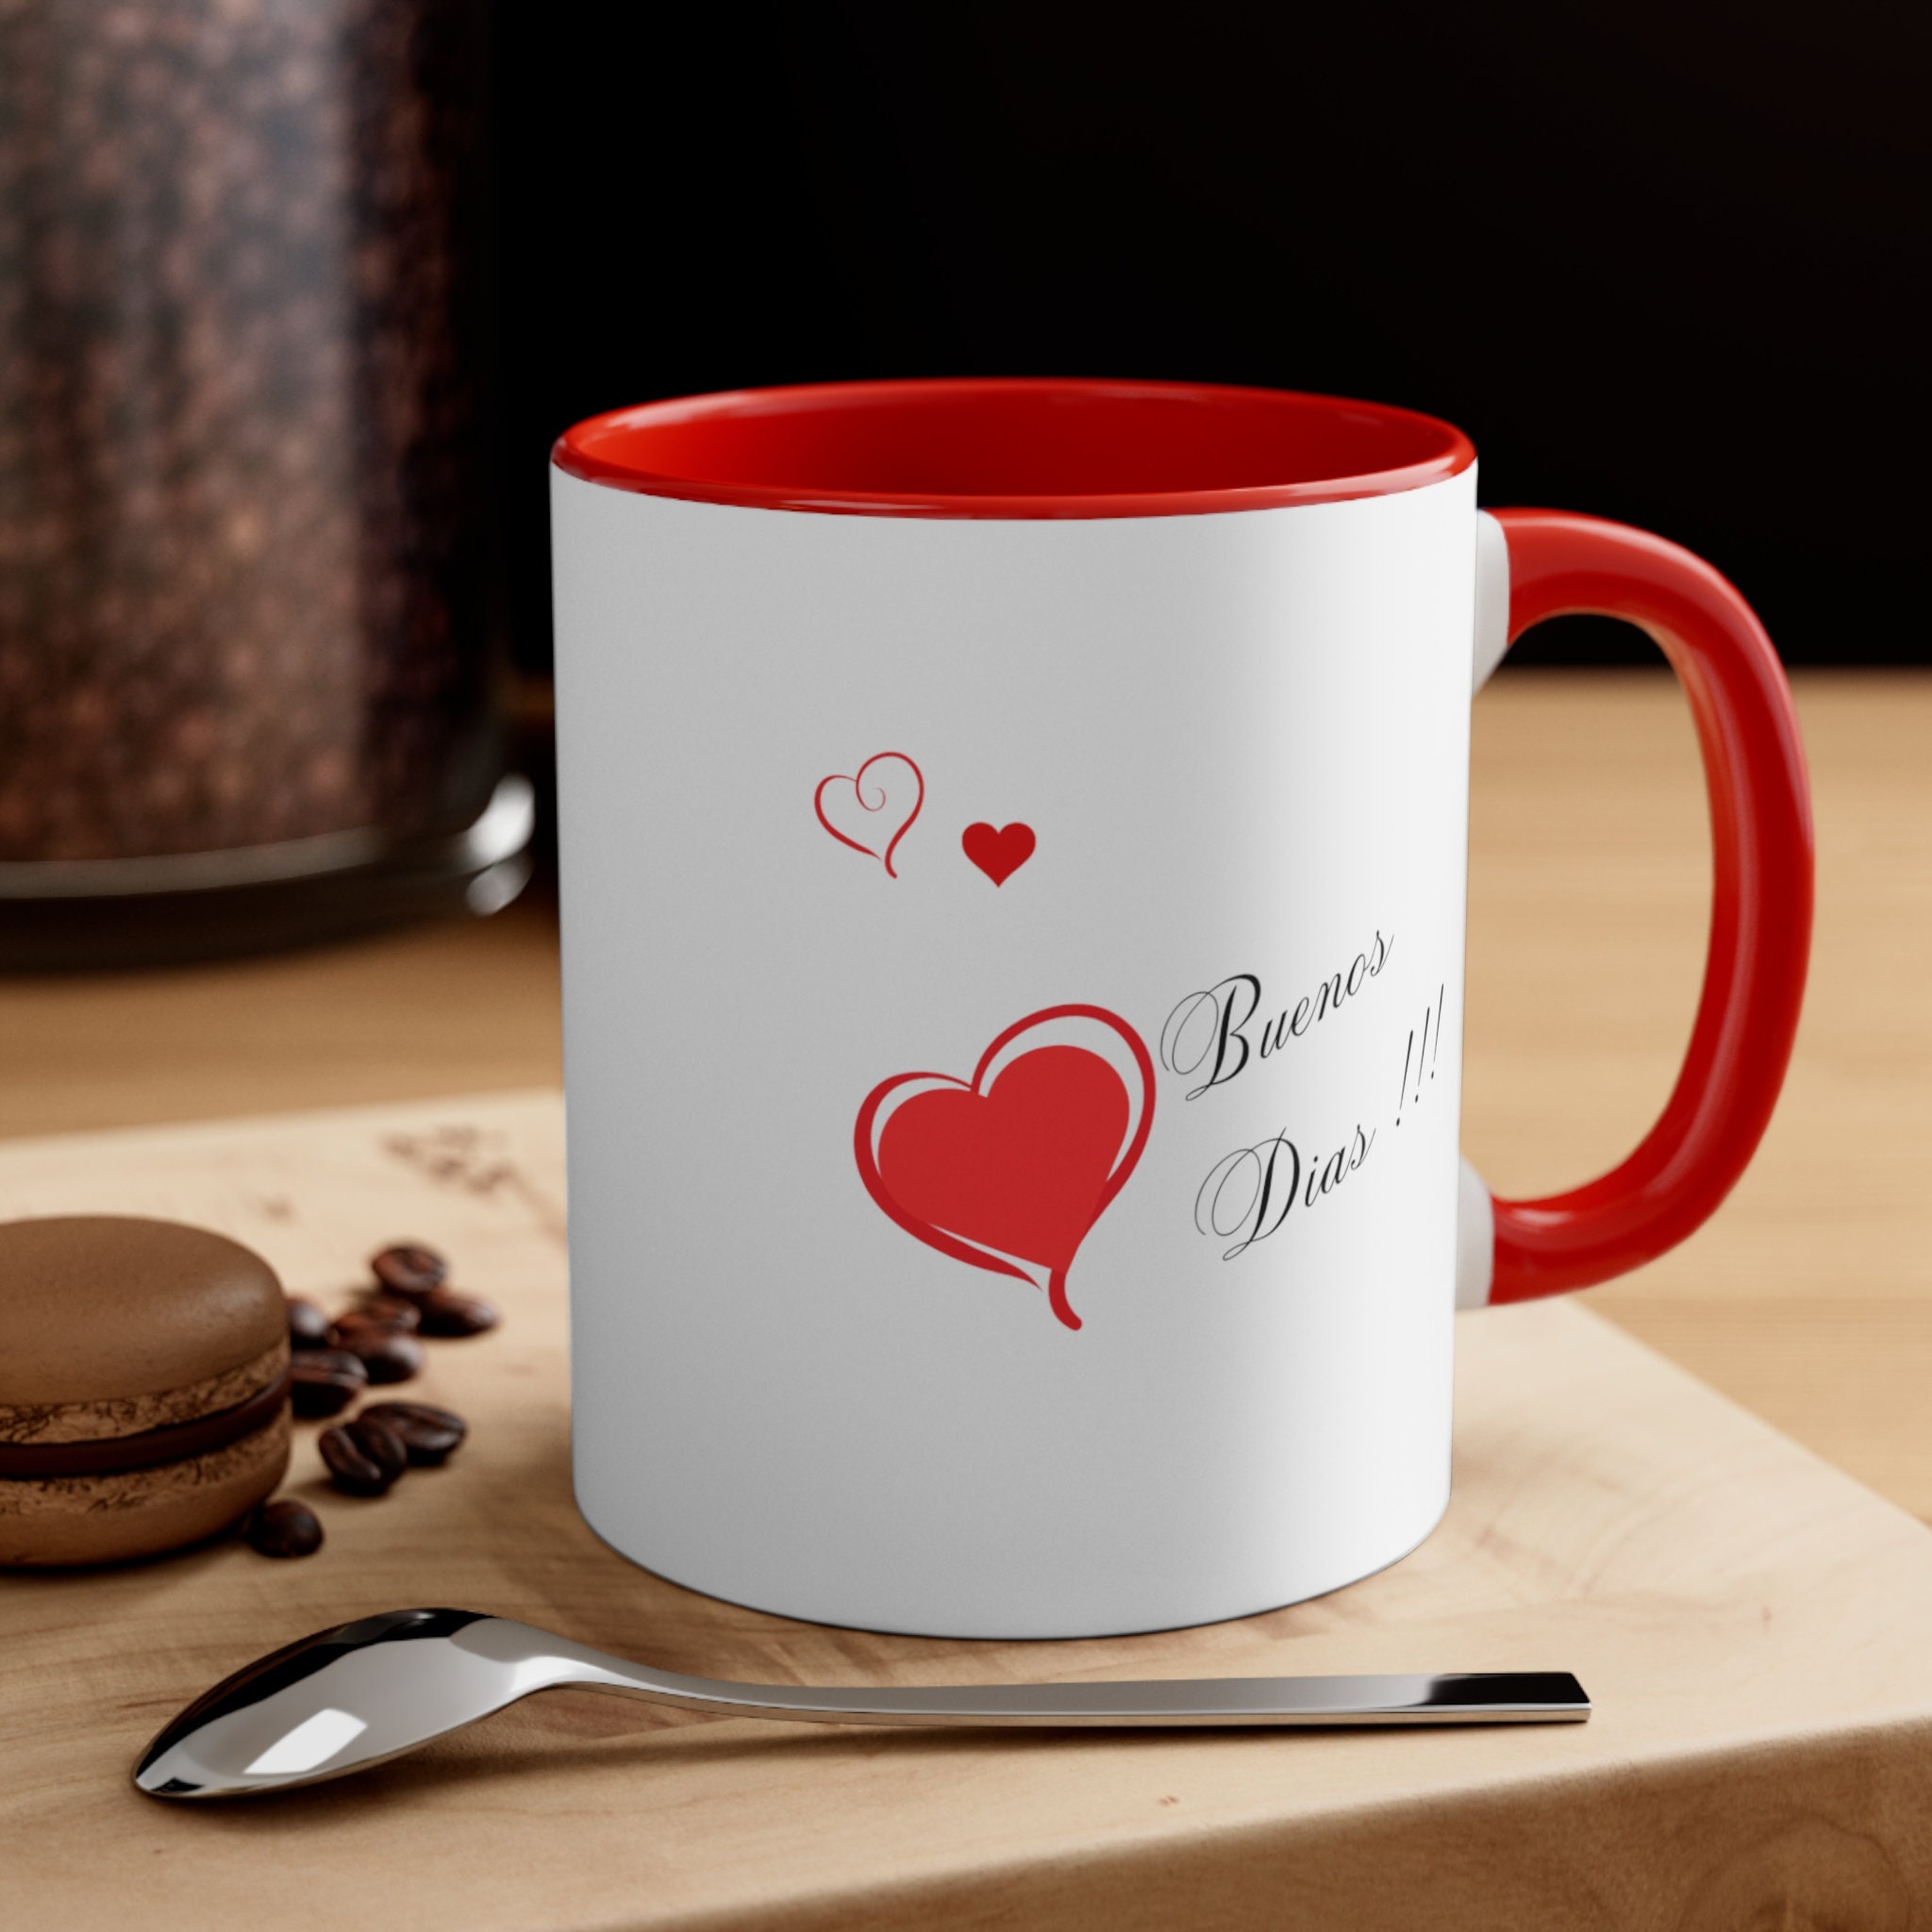 Hola Buenos Dias Coffee Cup, Coffee Mug, Coffee Mugs for Women, Coffee Mugs  for Men, Coffee Mugs for Women Gift 